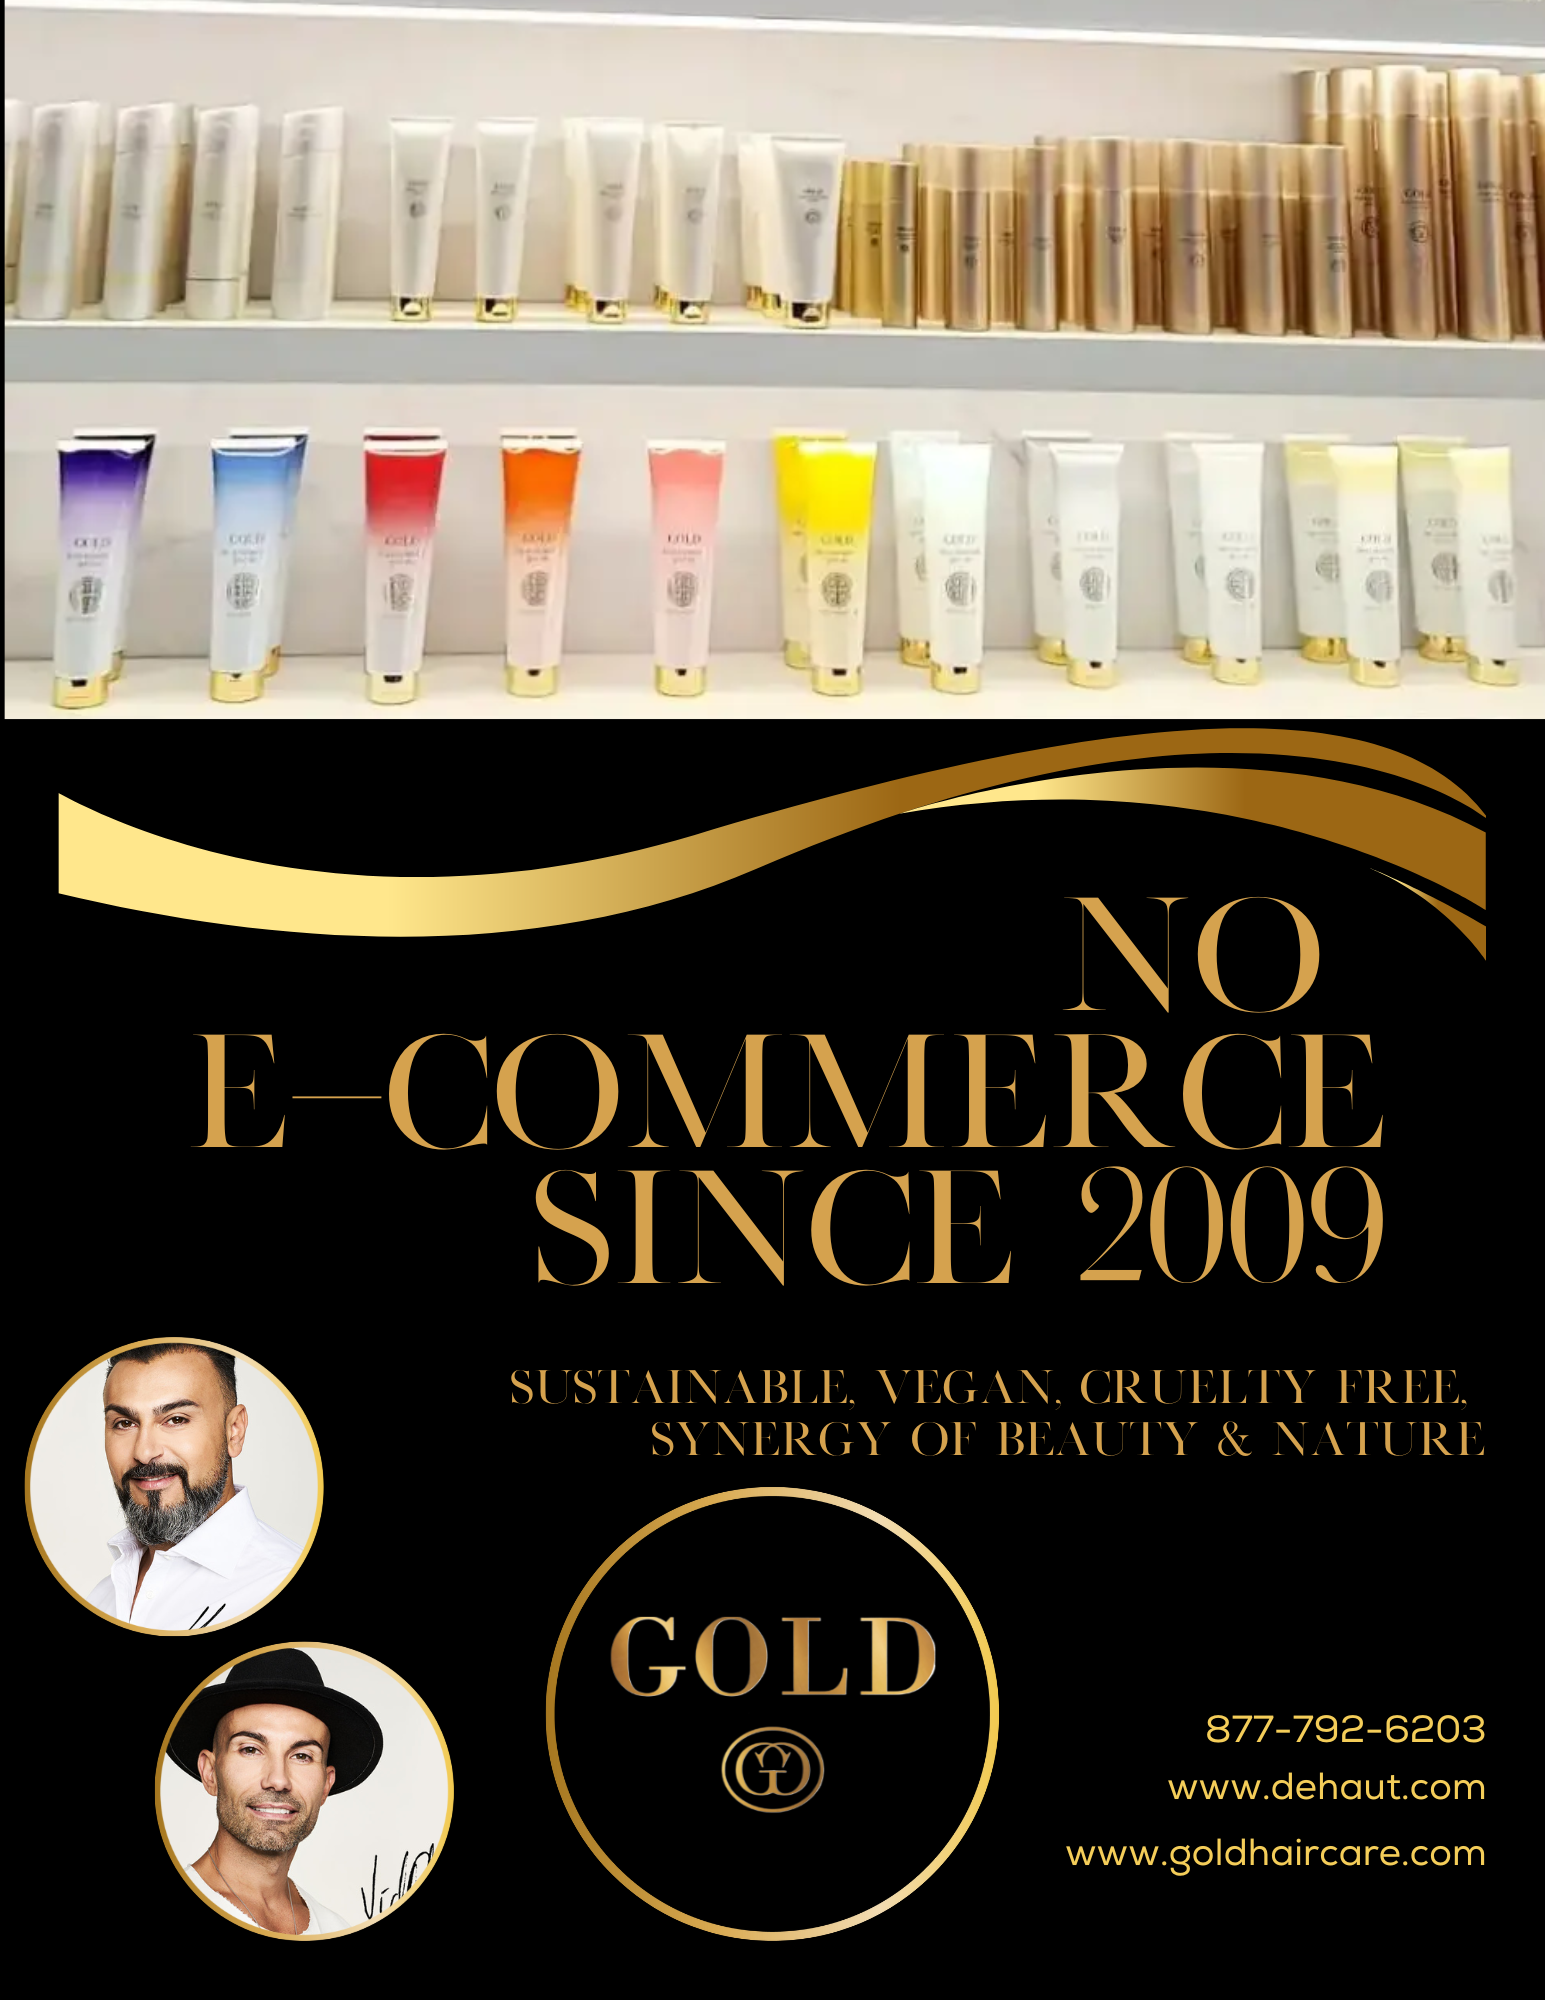 Gold Haircare: No E-commerce since 2009